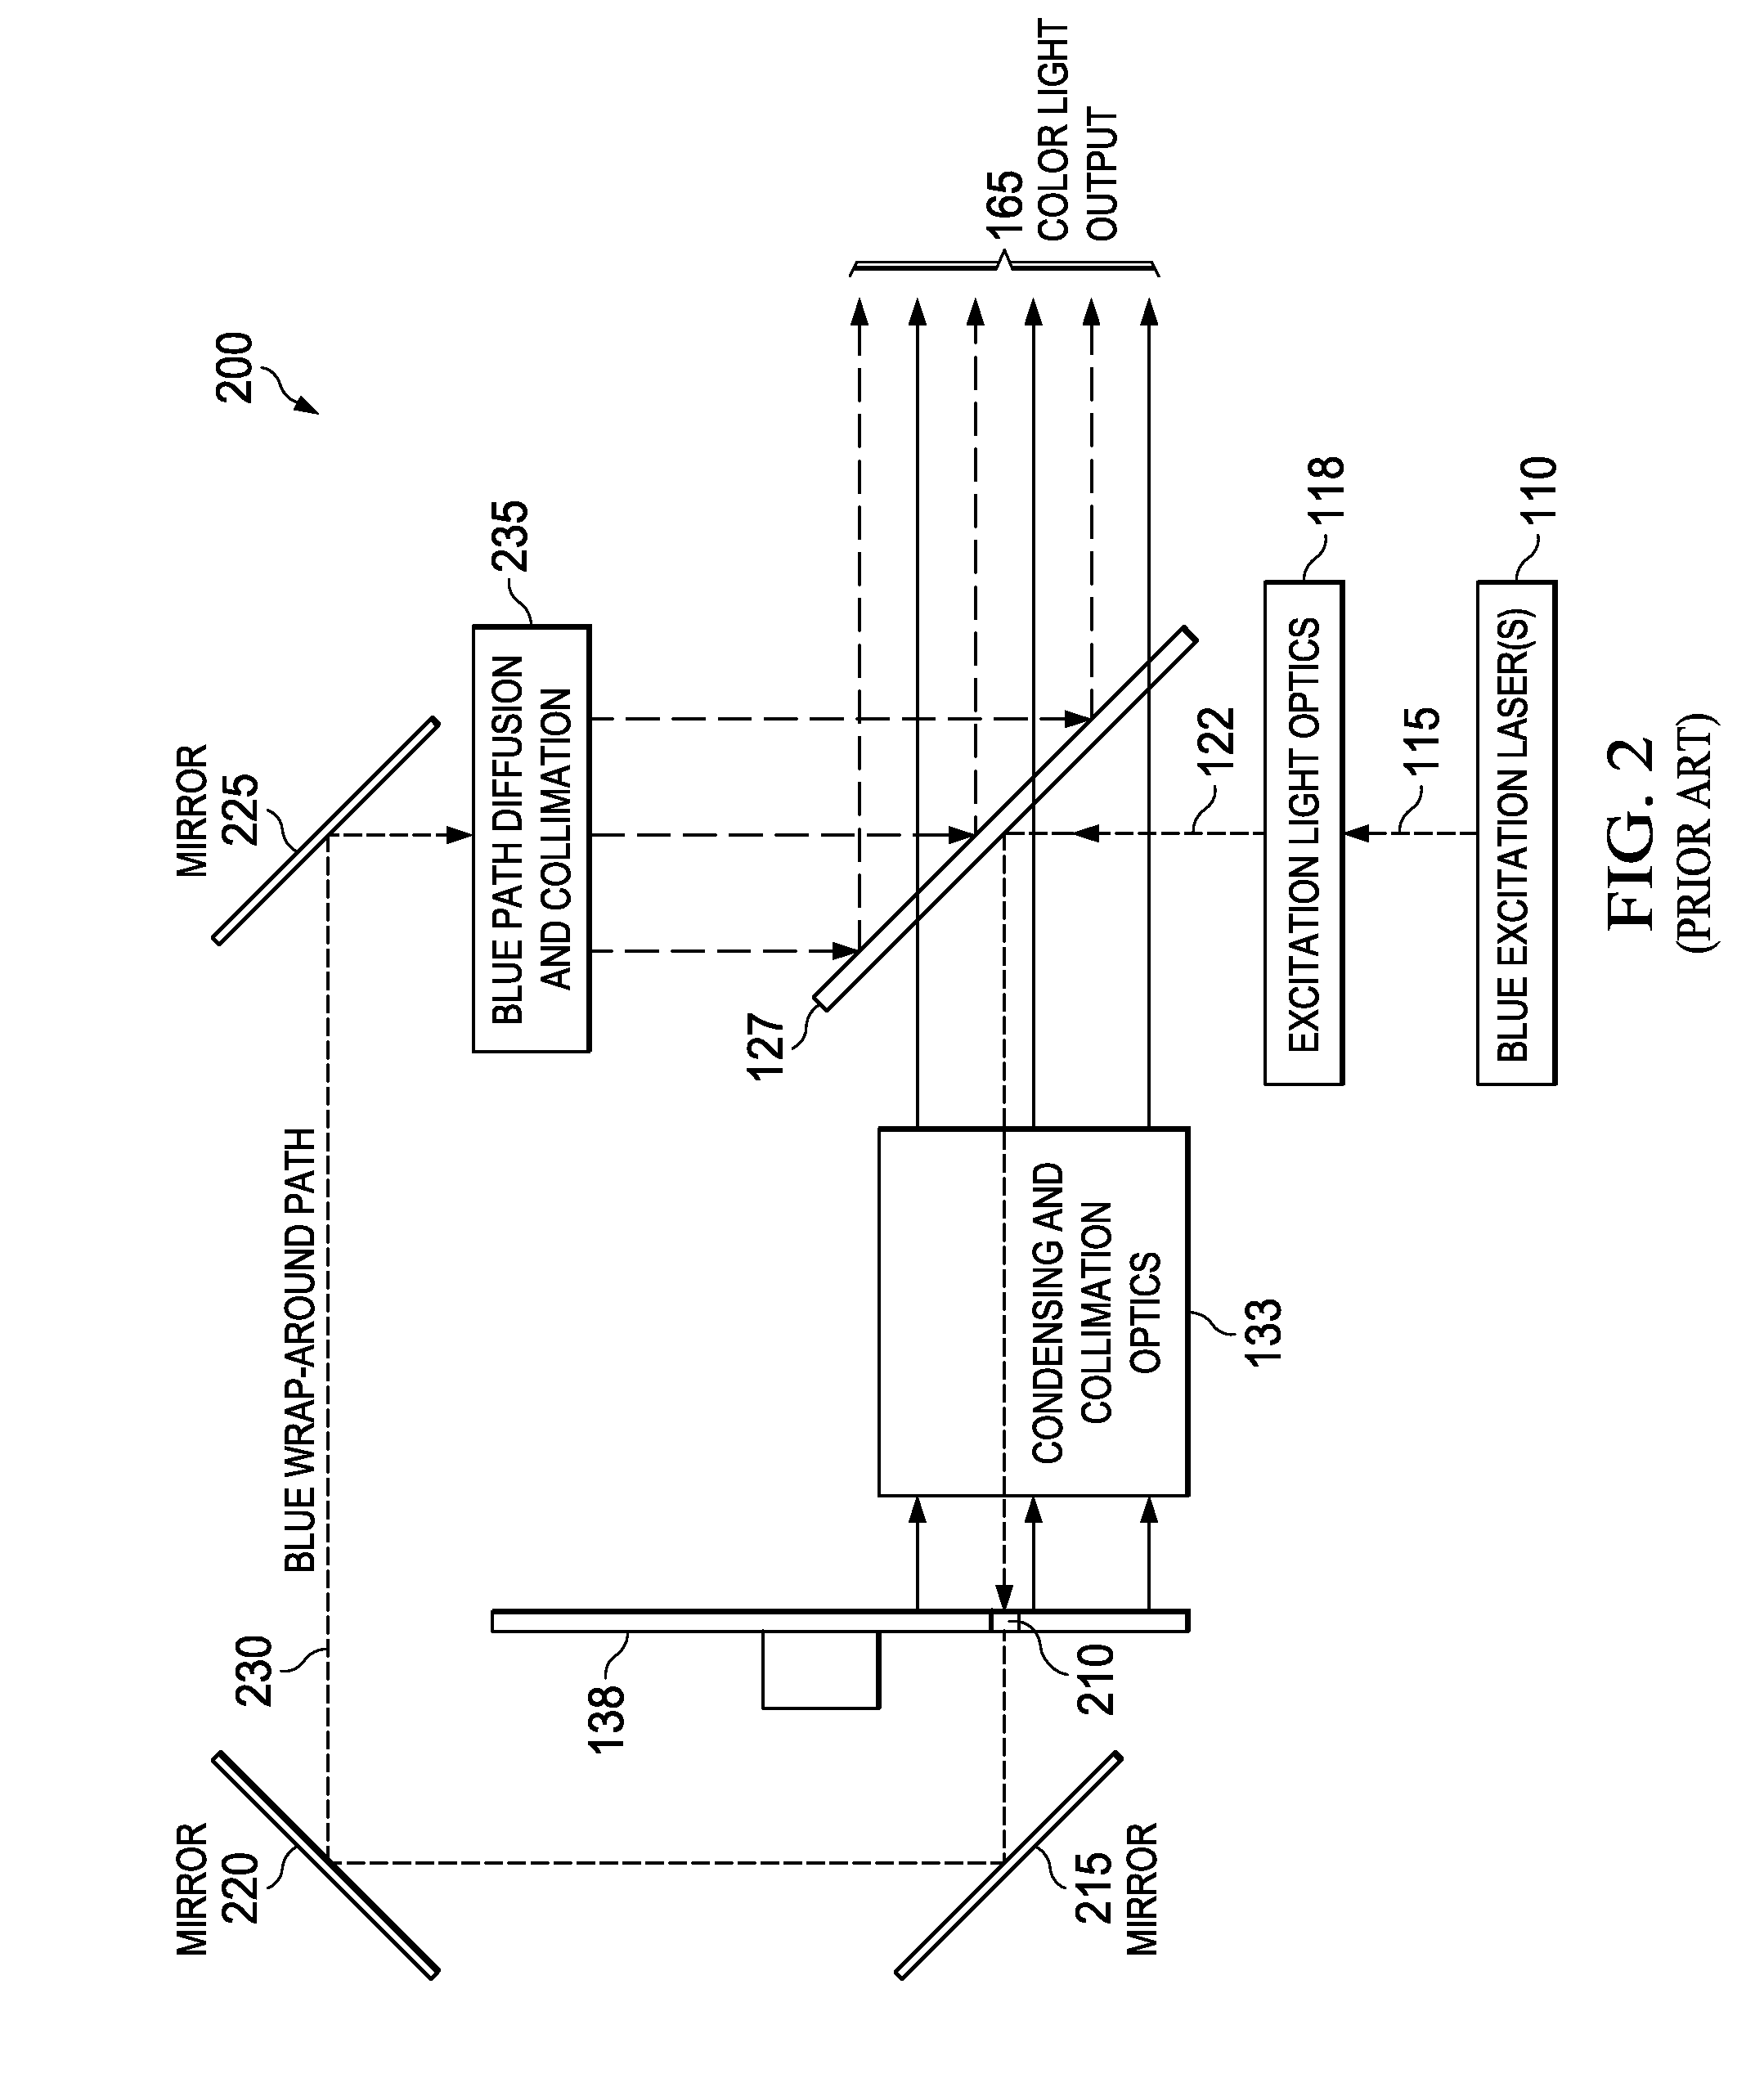 Side-illuminated excitation optics apparatus and systems